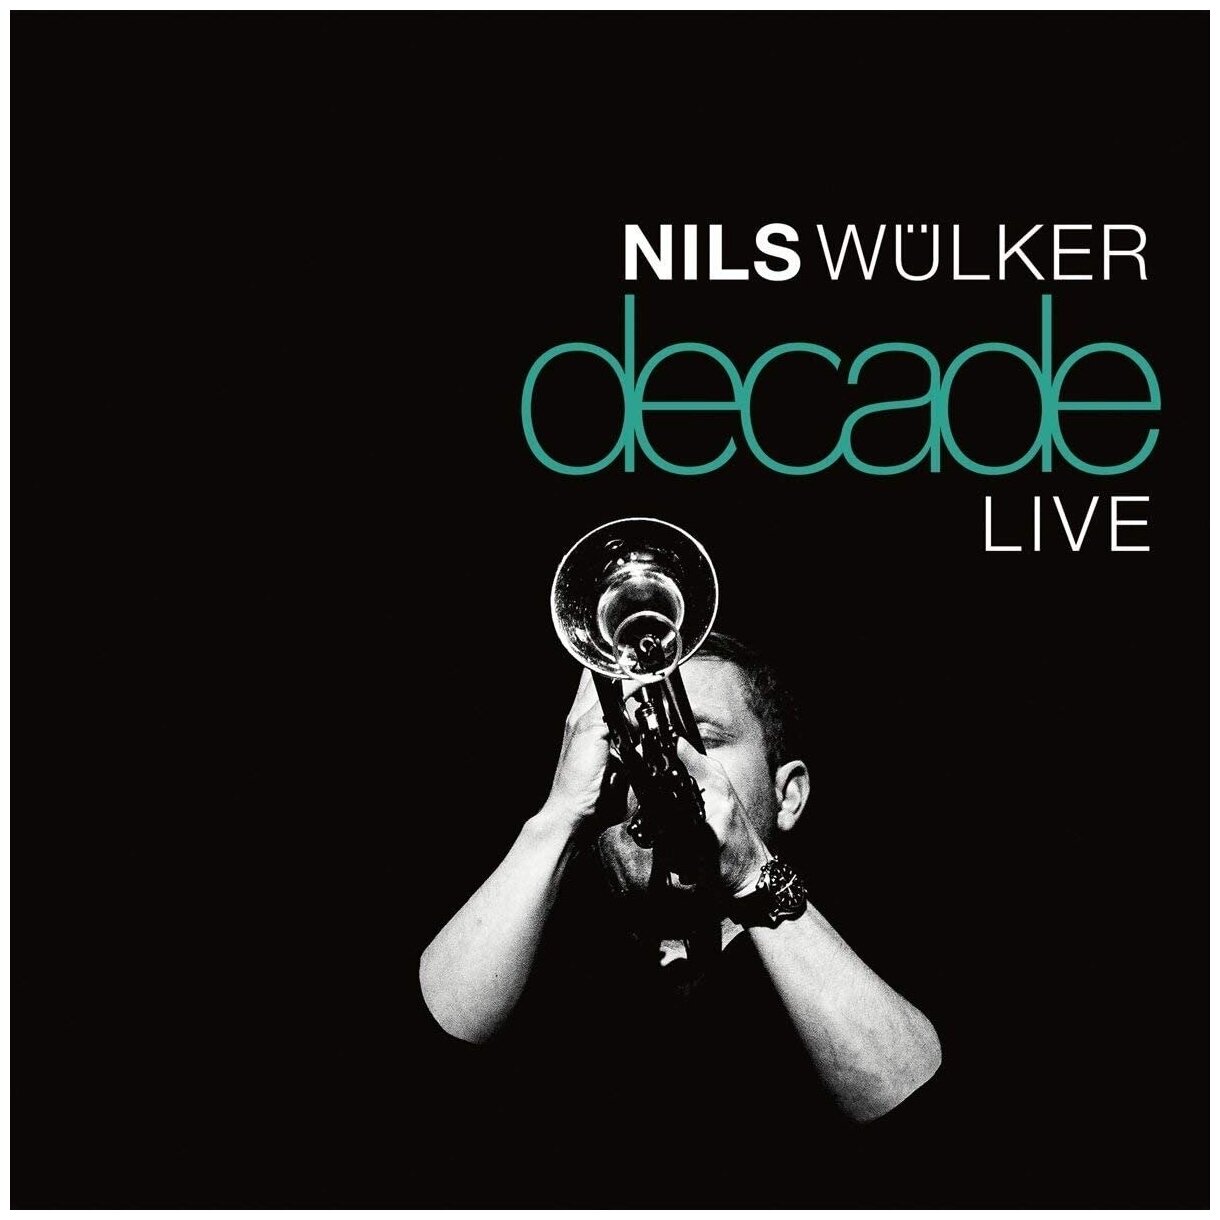 WULKER, NILS DECADE LIVE Black Vinyl 12" винил Warner Music - фото №1